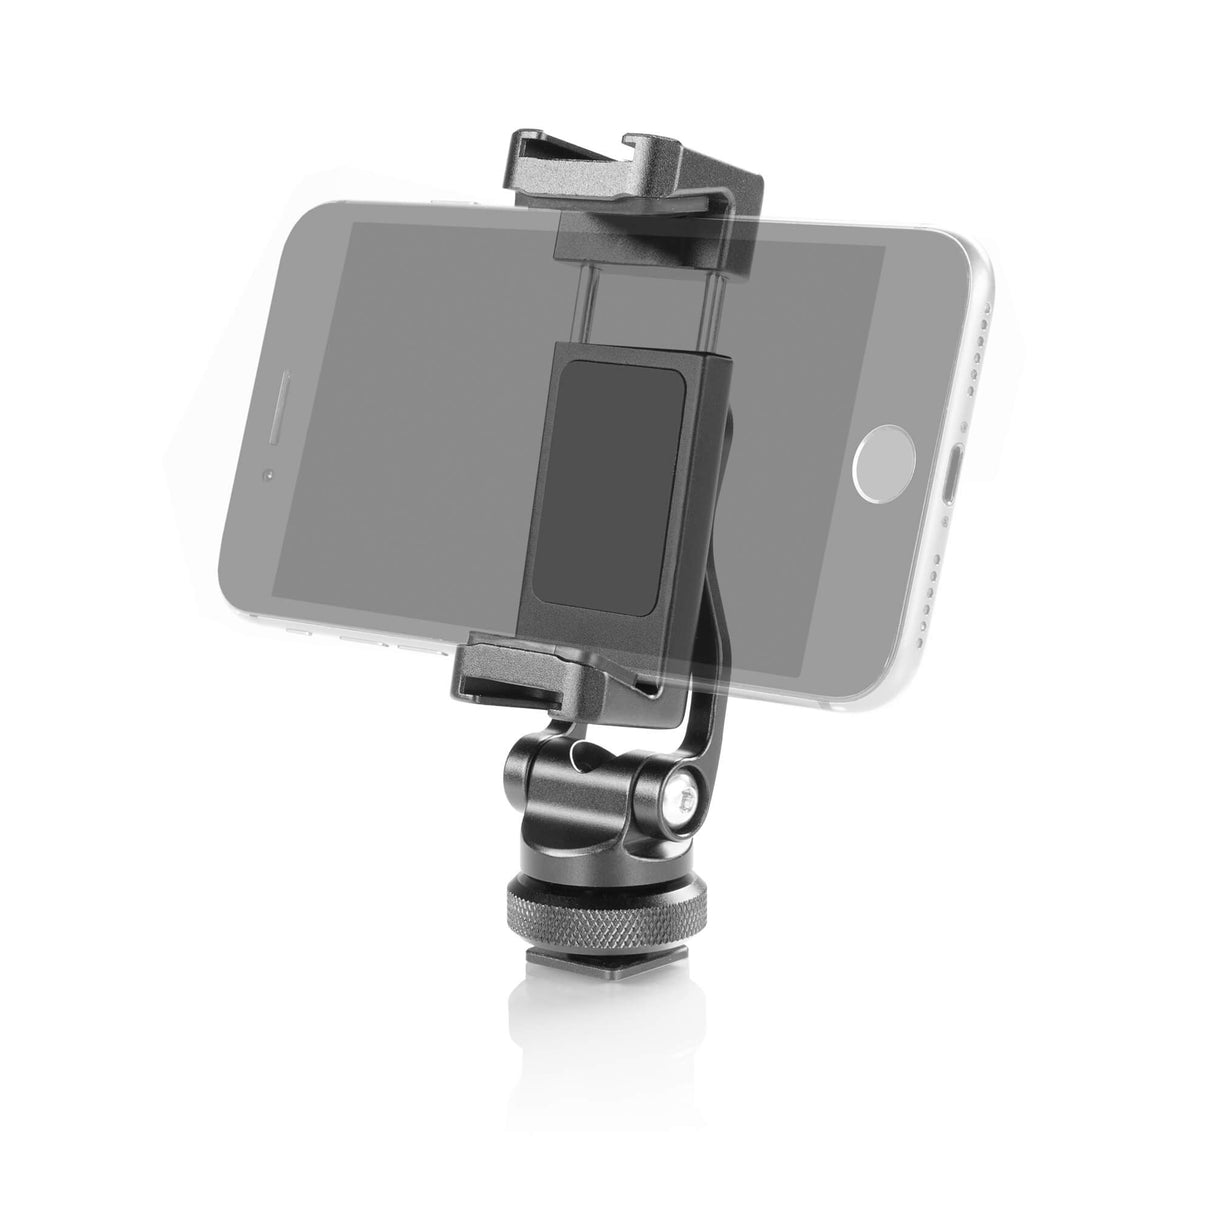 Pince inclinable en aluminium pour smartphone